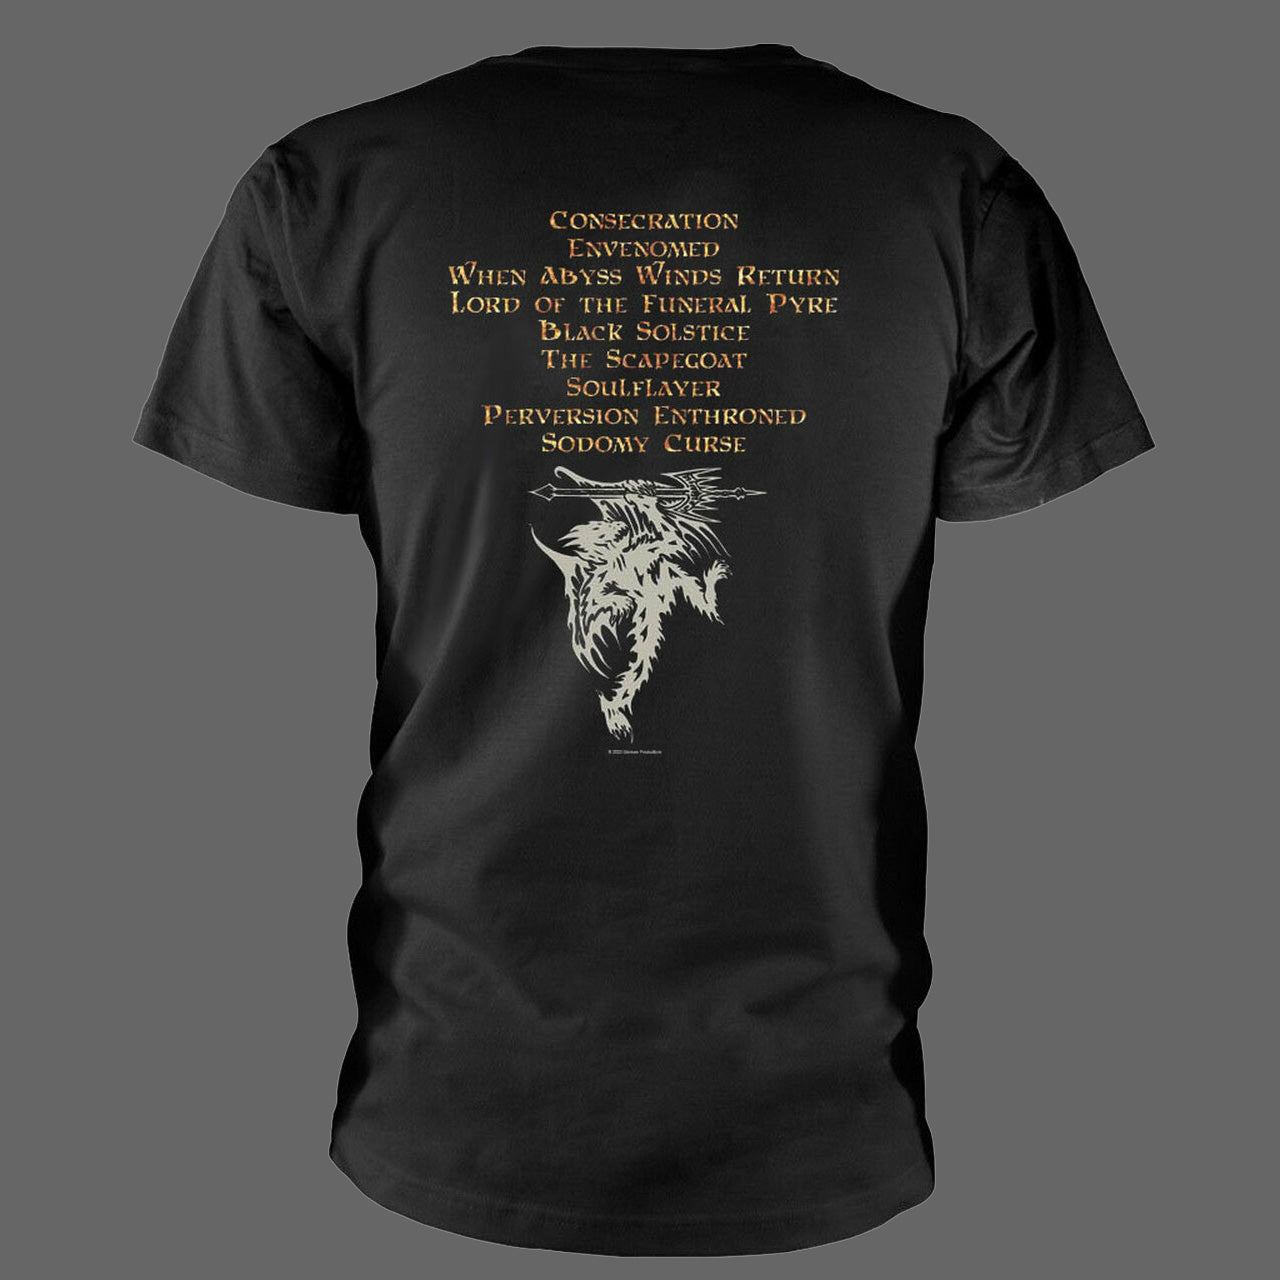 Angelcorpse - Hammer of Gods (T-Shirt)